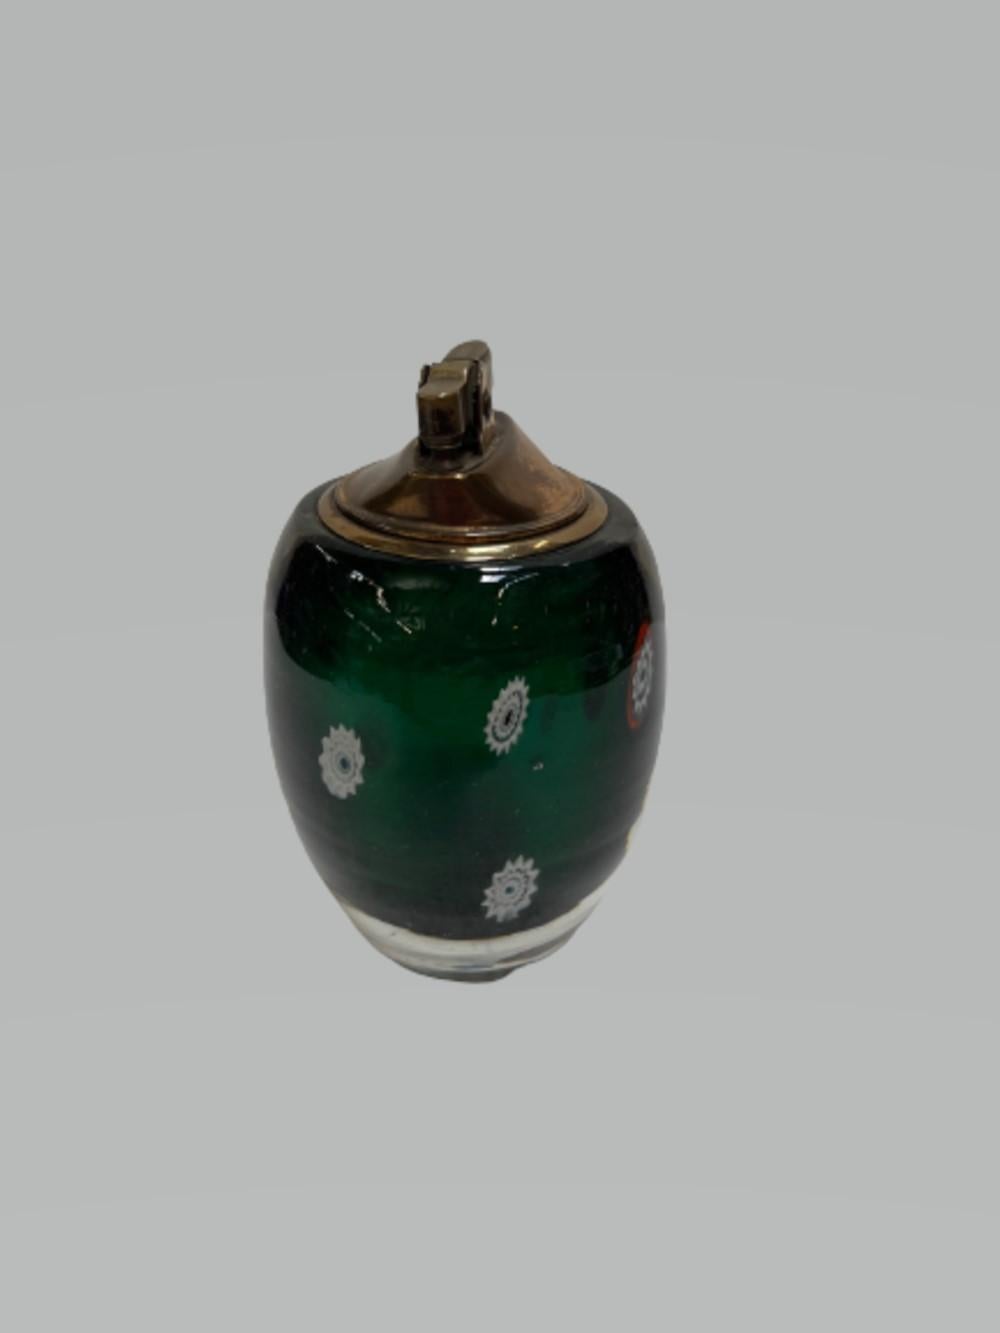 Original 1960s Italian green Murano glass brass table lighter.